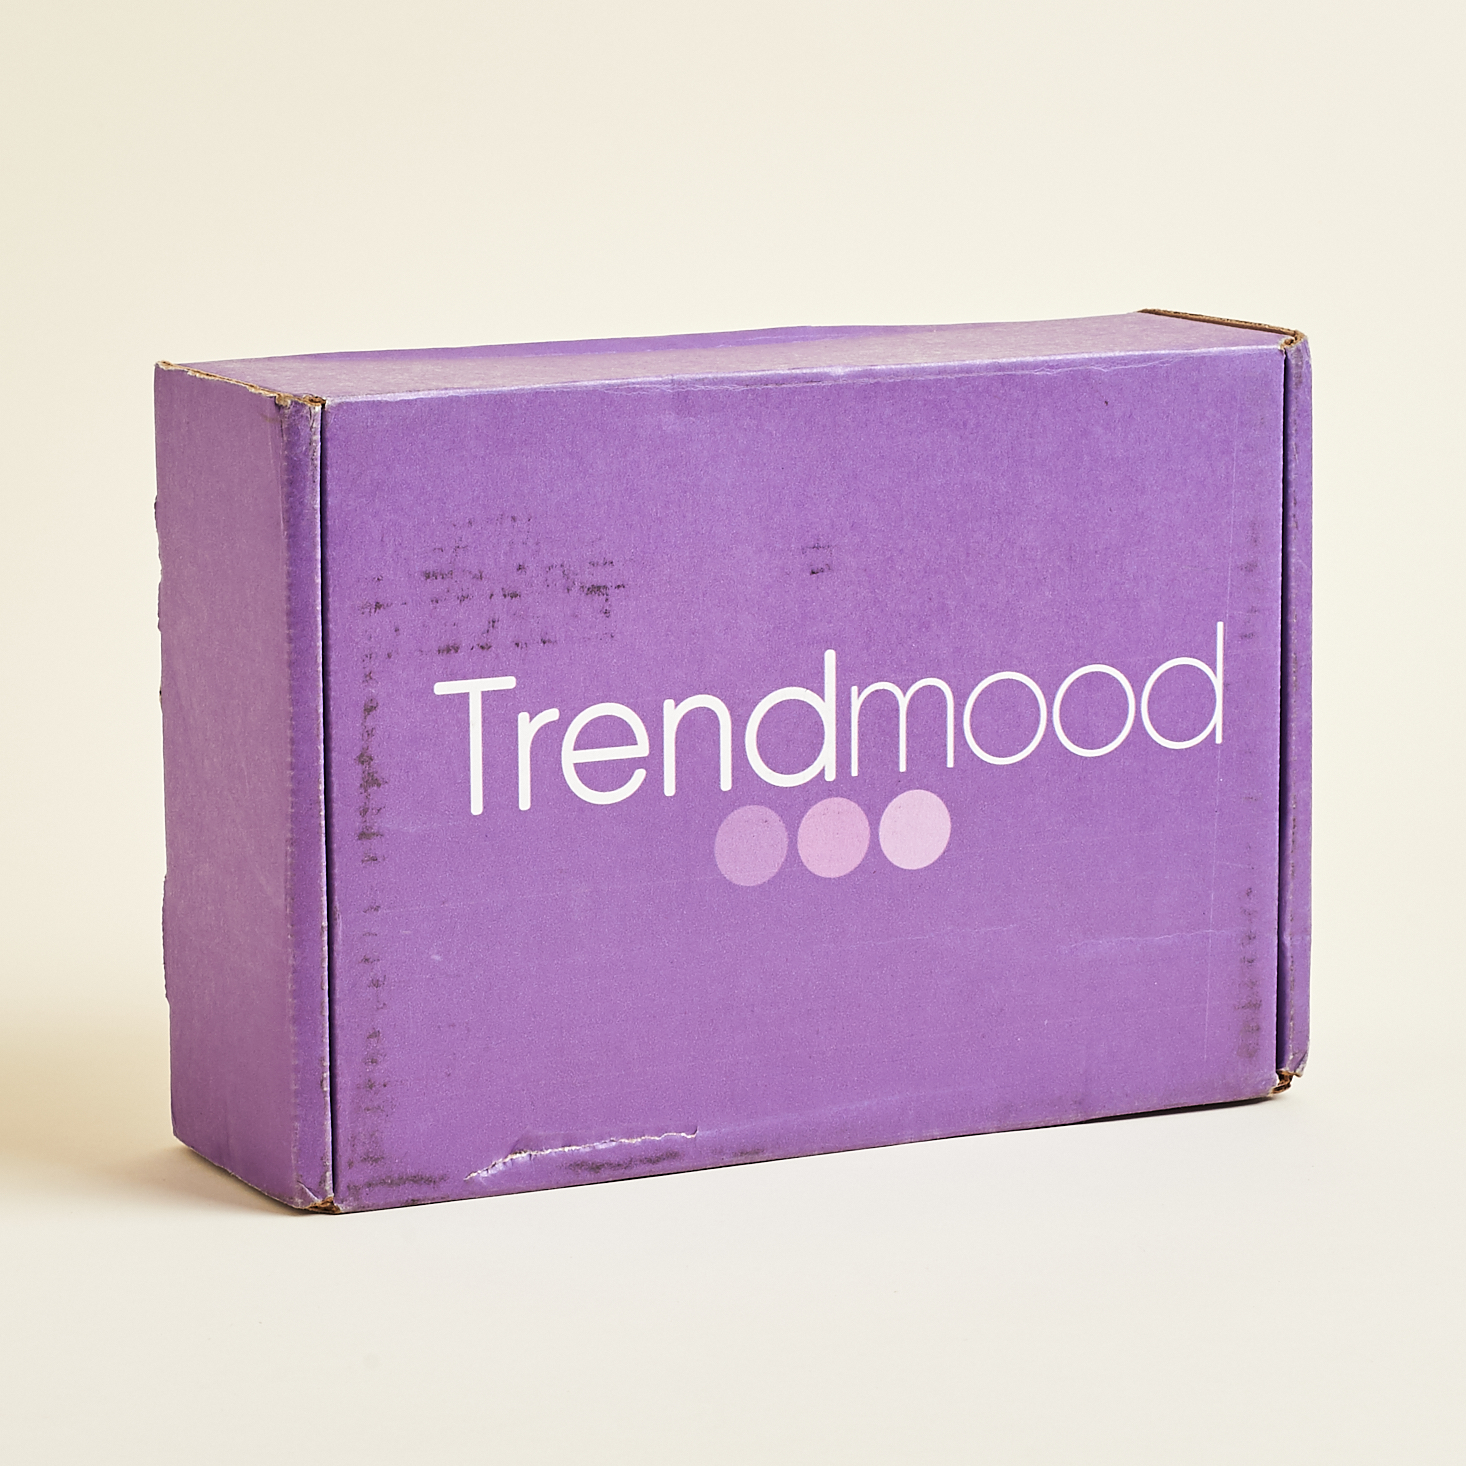 TrendMood x GloSkin Beauty Box Review